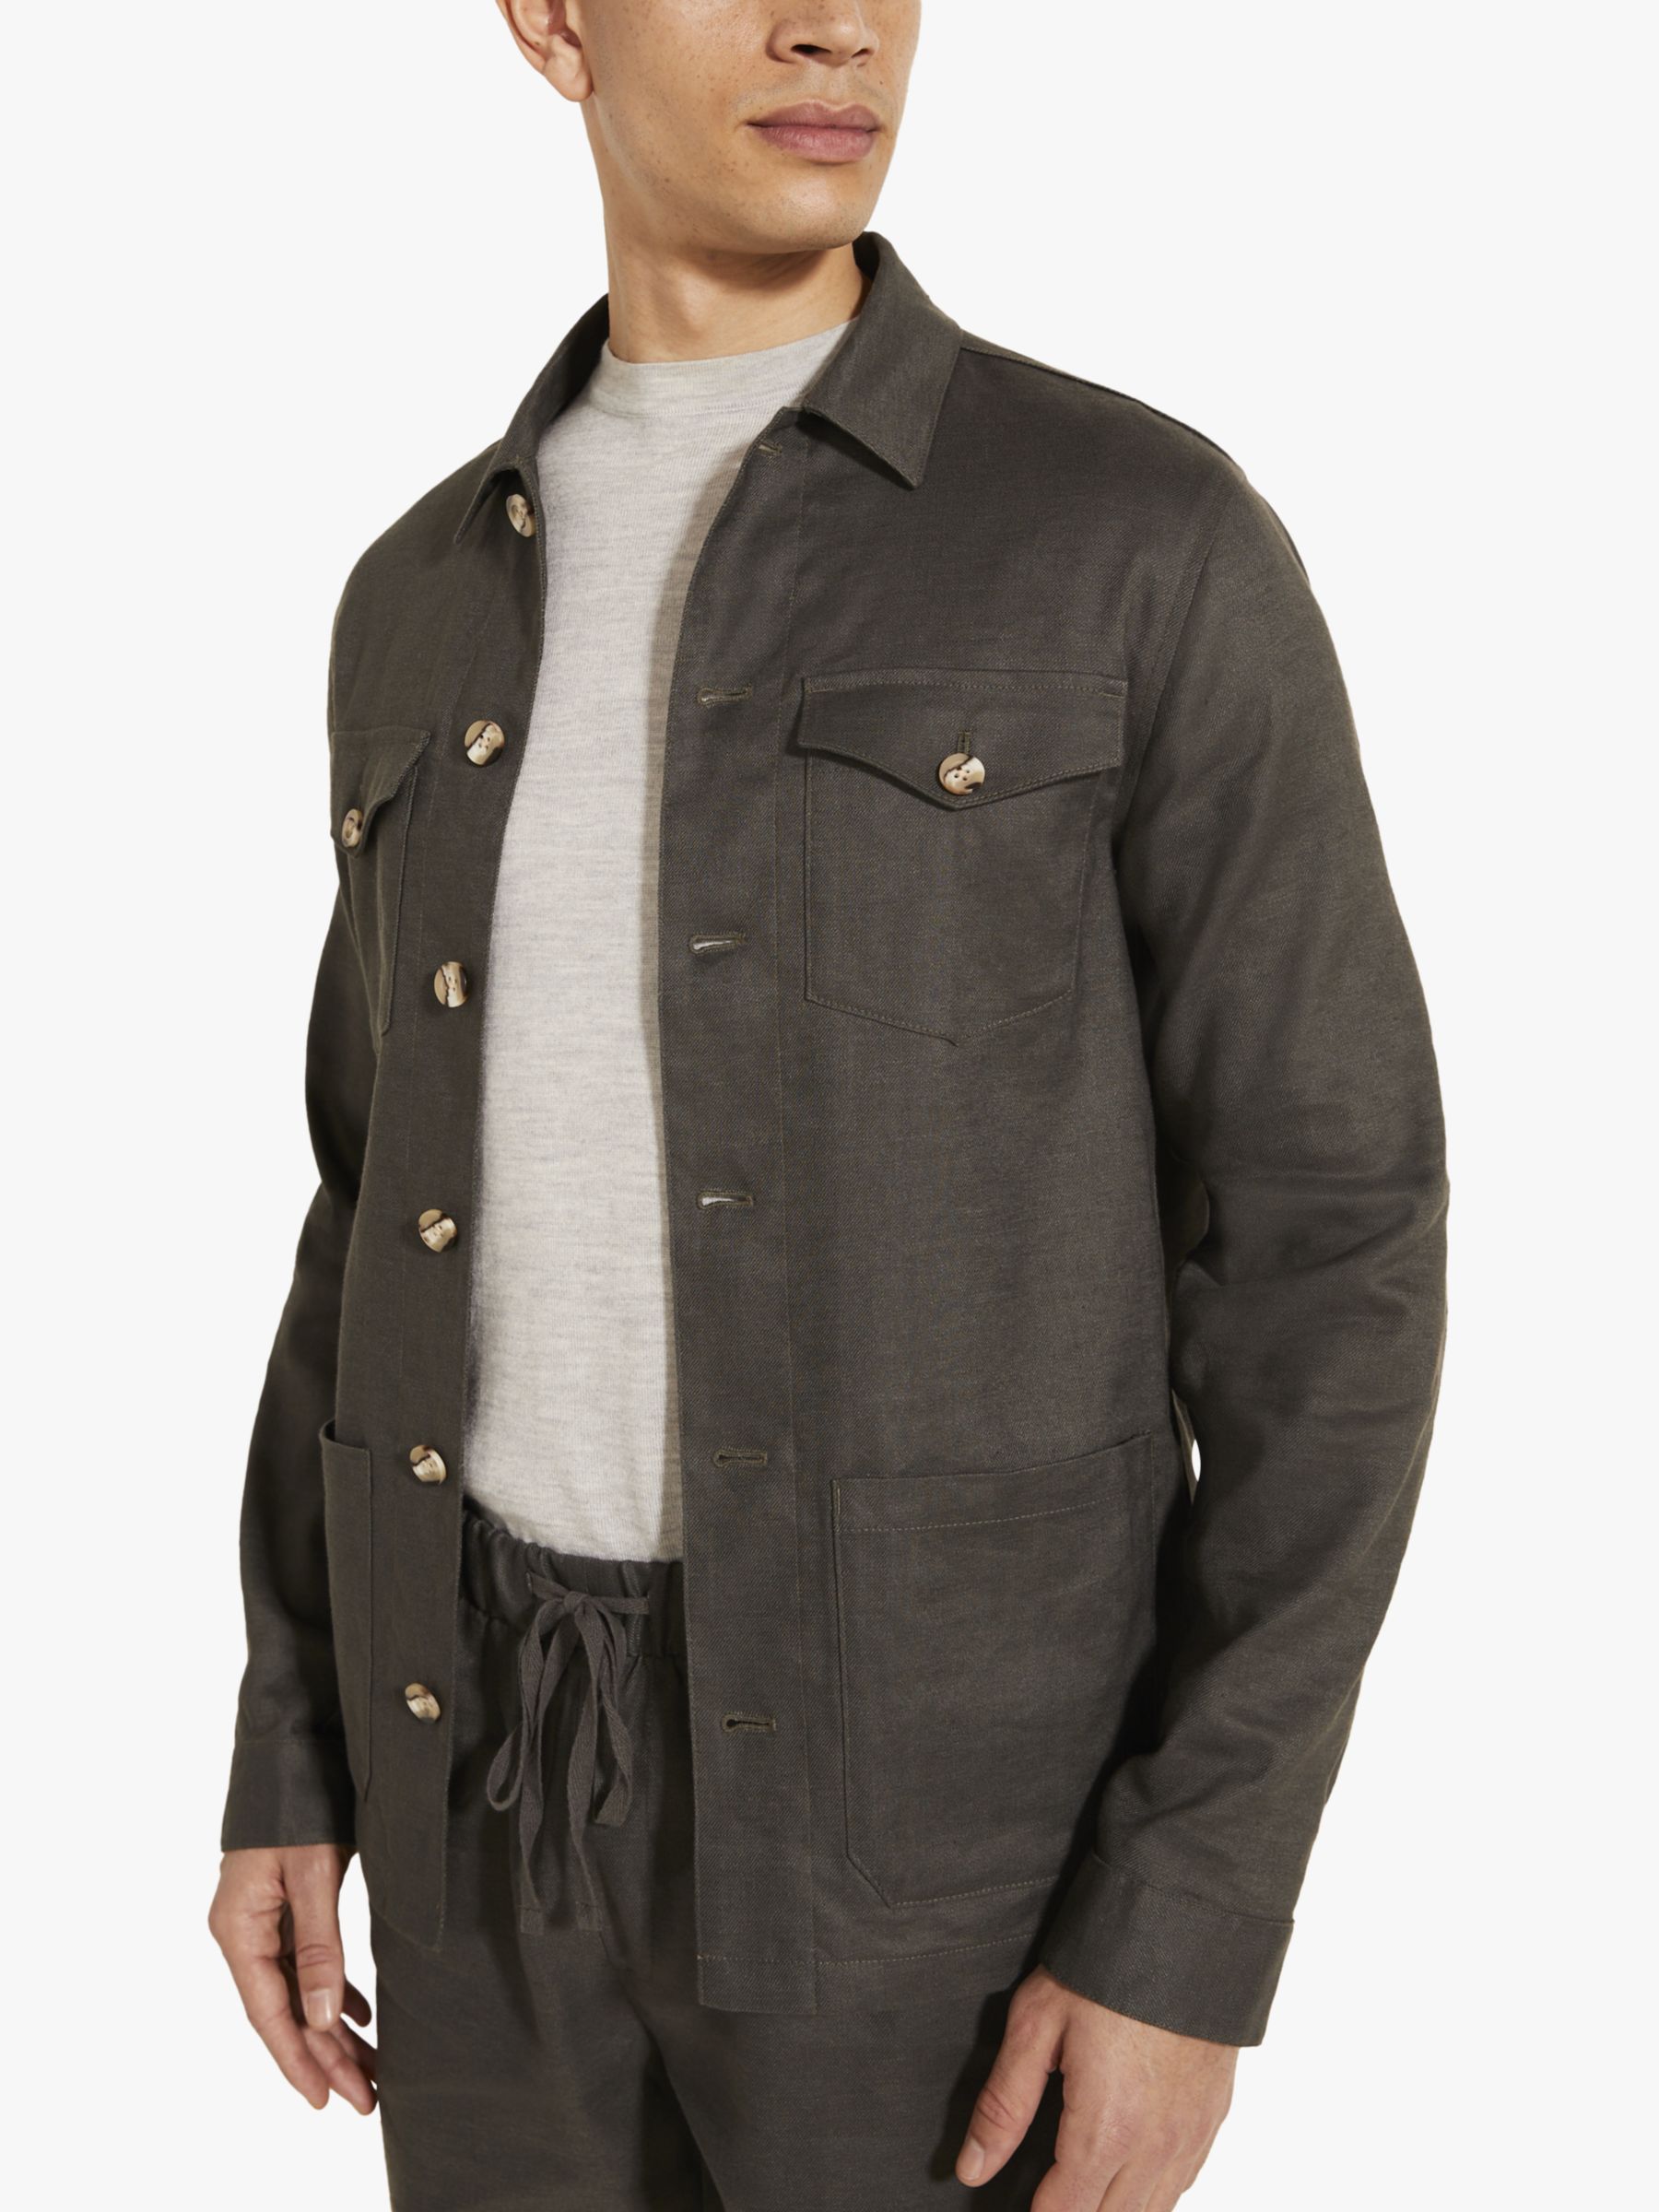 Moss Linen Twill Safari Jacket, Khaki at John Lewis & Partners